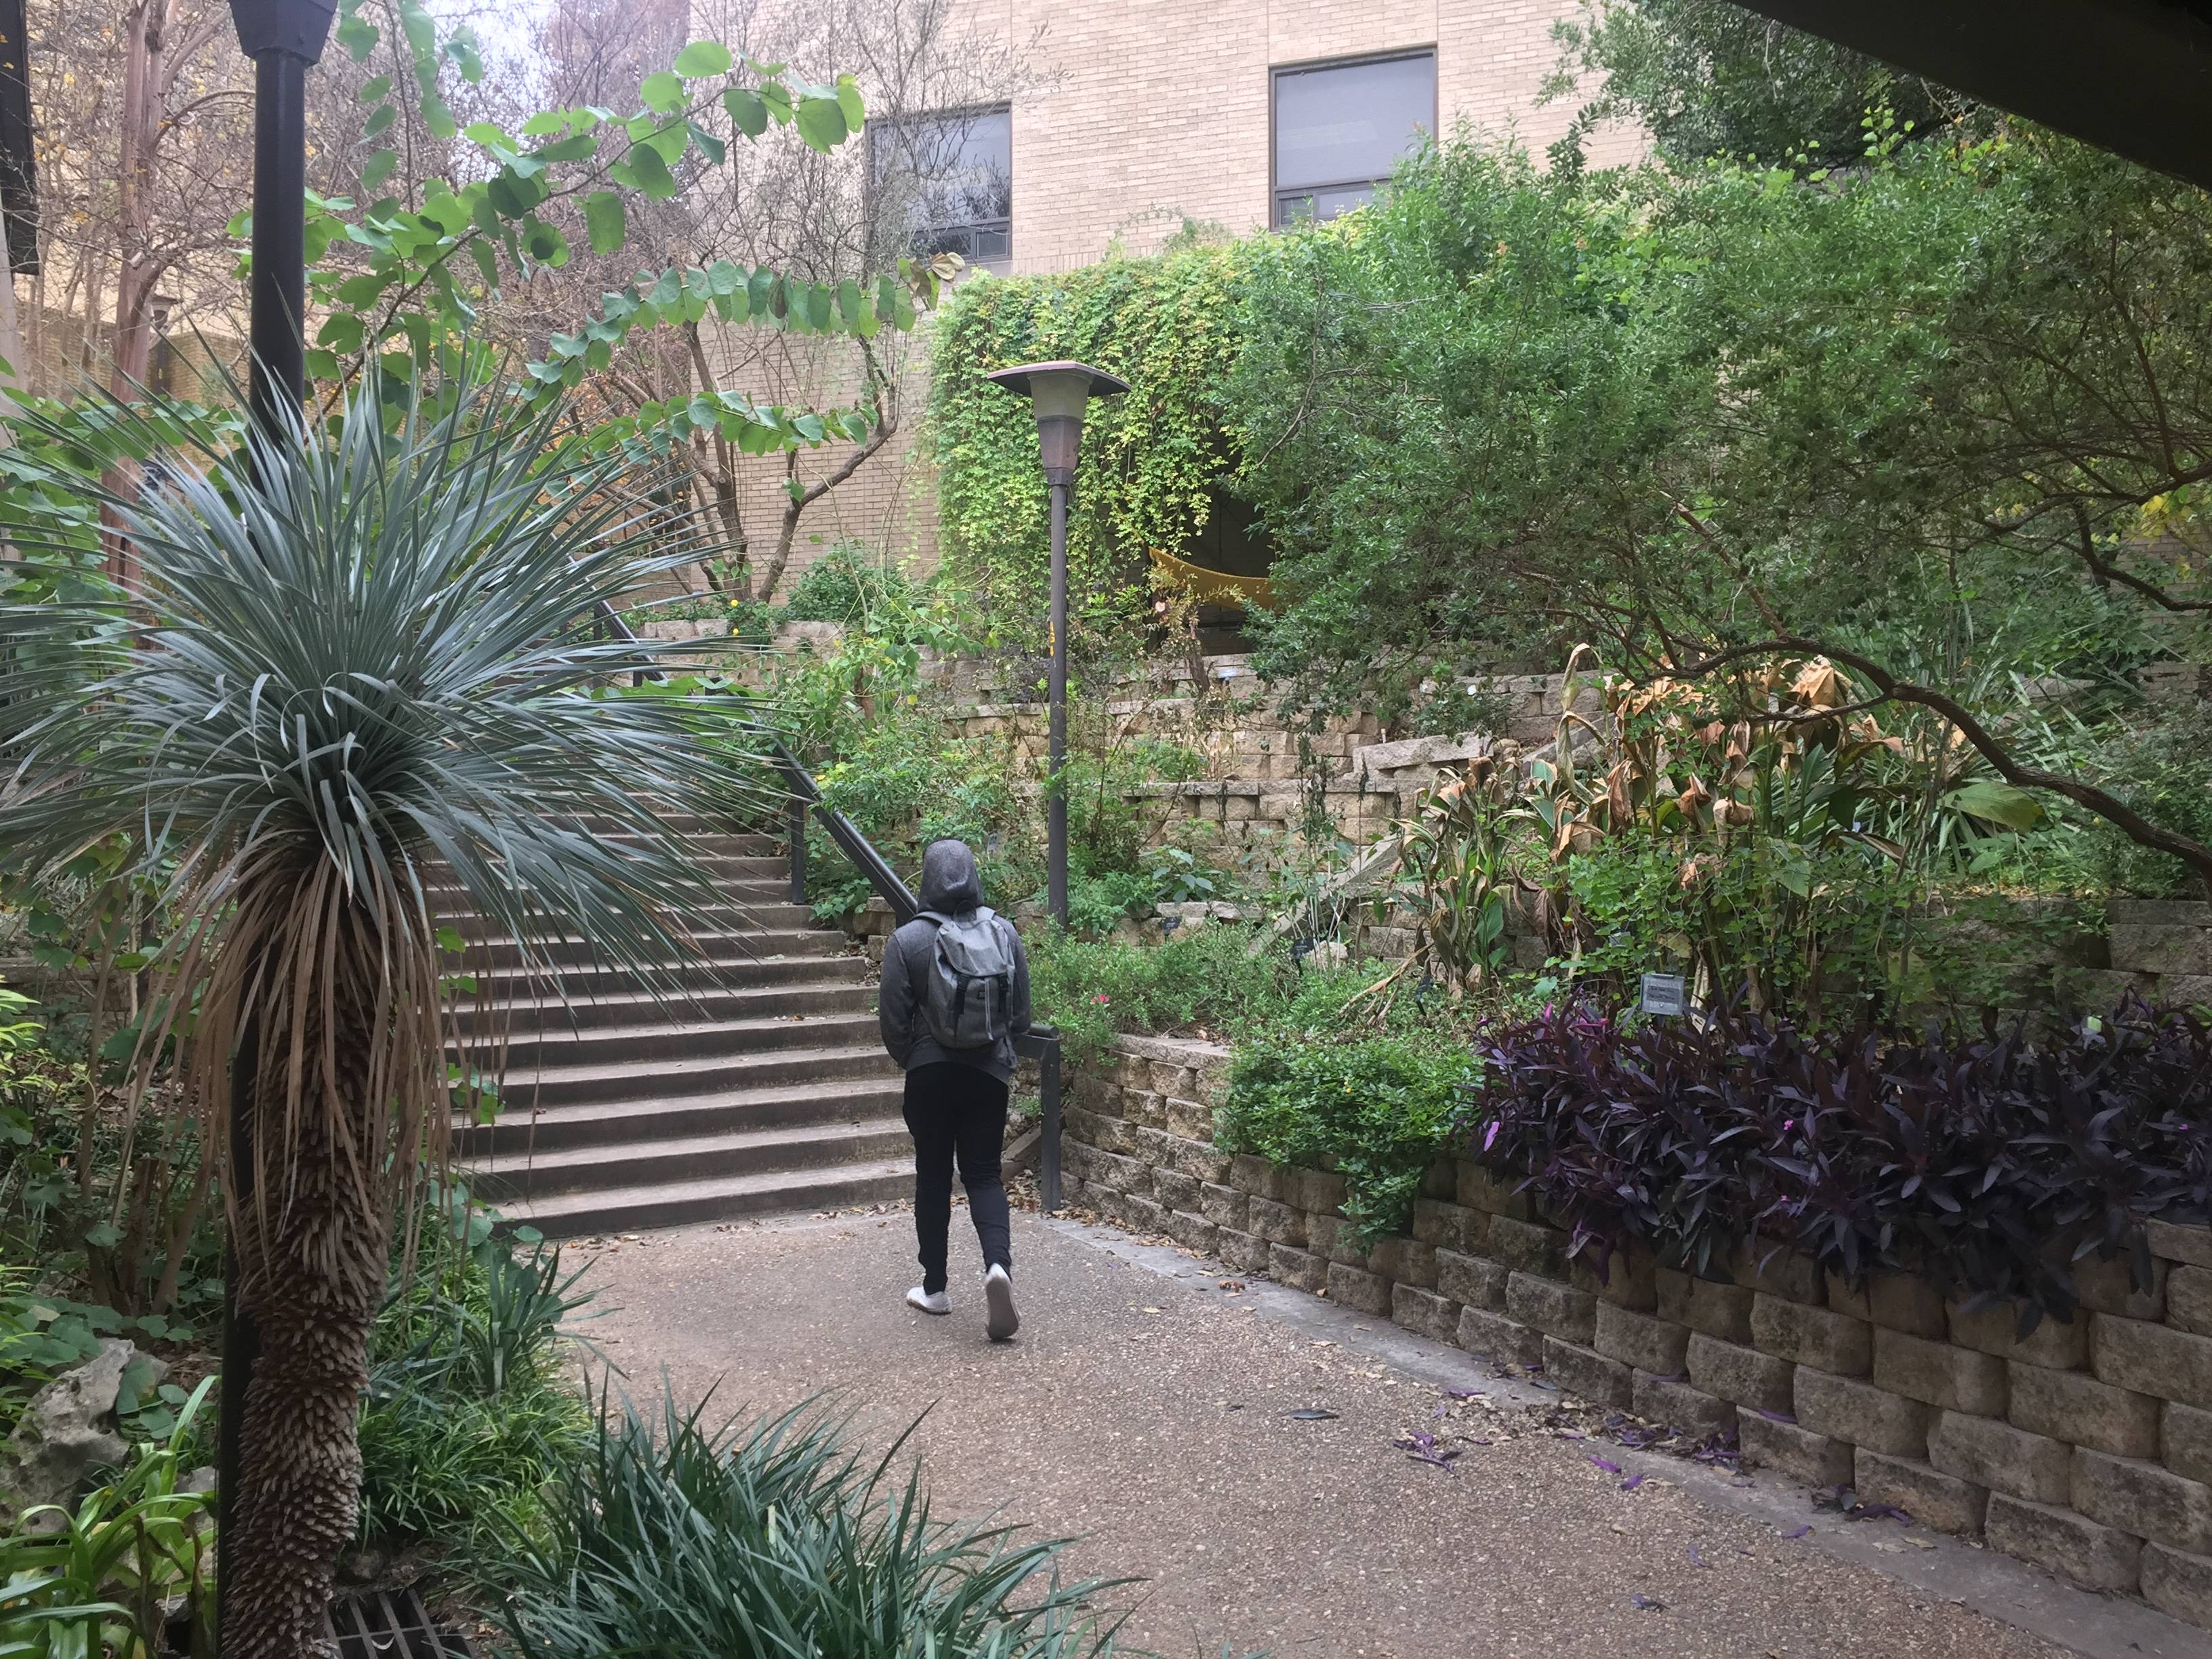 student walking through an outdoor garden